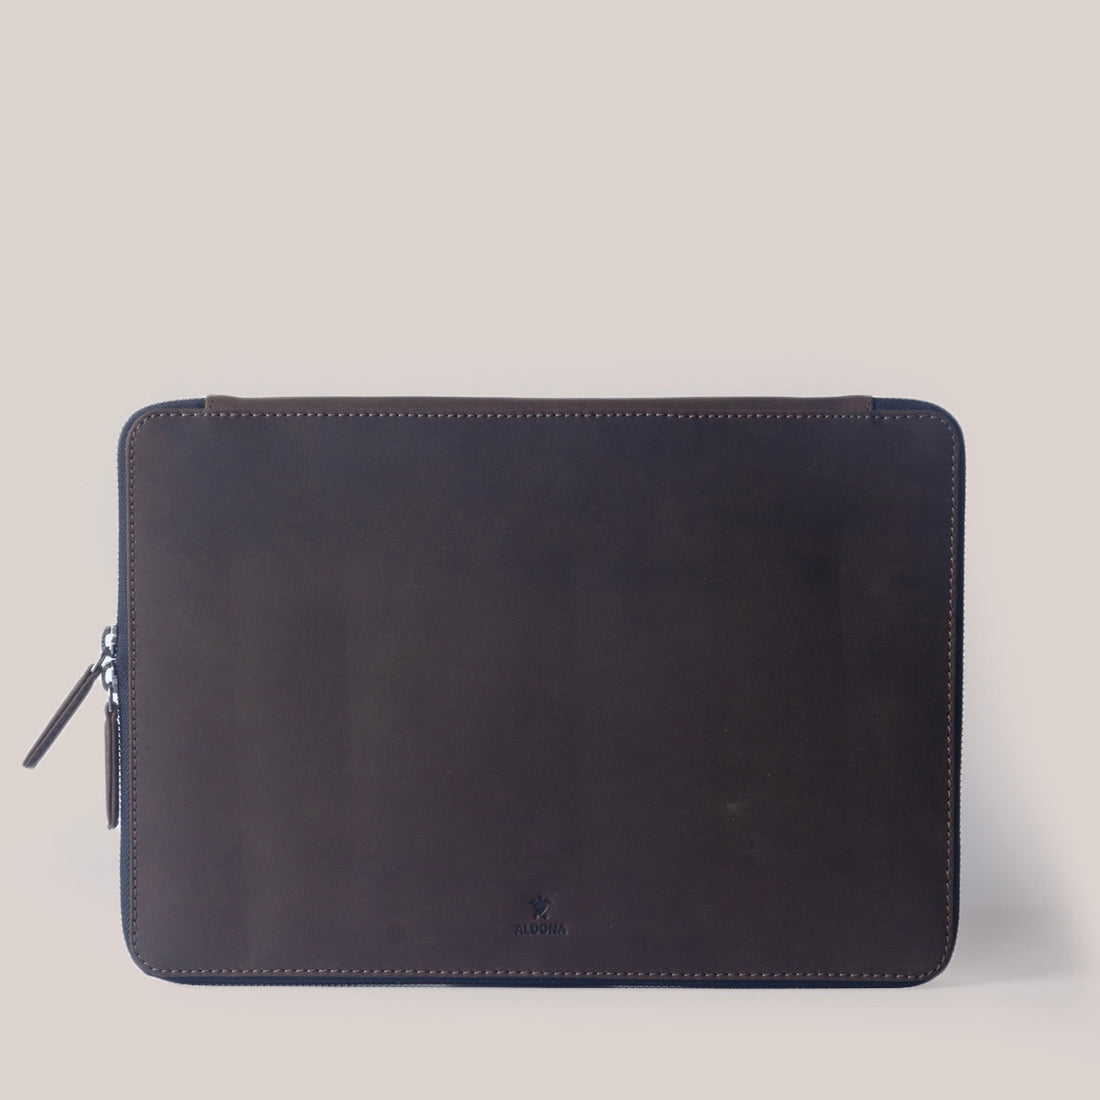 DELL XPS 15 Zippered Laptop Case - Onyx Black